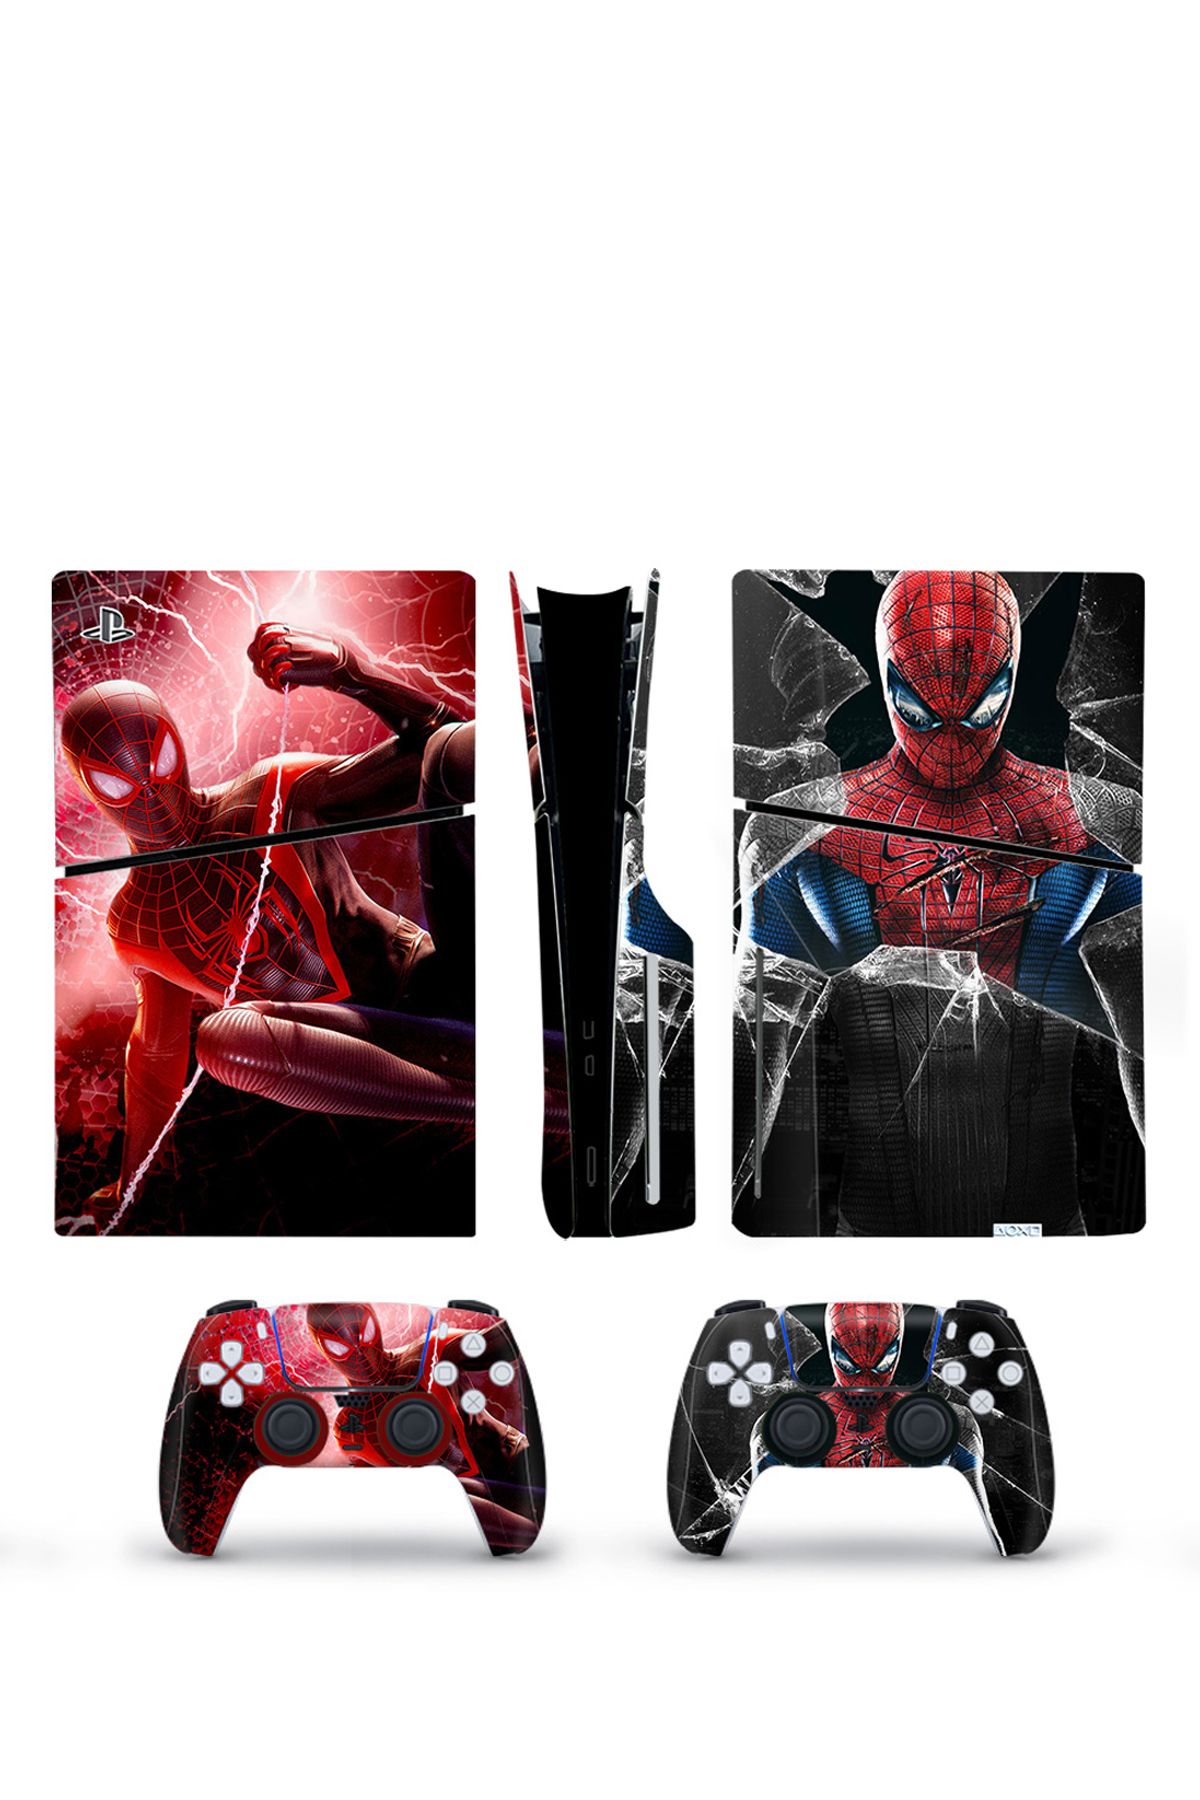 Kt Grup Spider Man Playstation 5 Slim Disk Versiyon Sticker Kaplama Seti